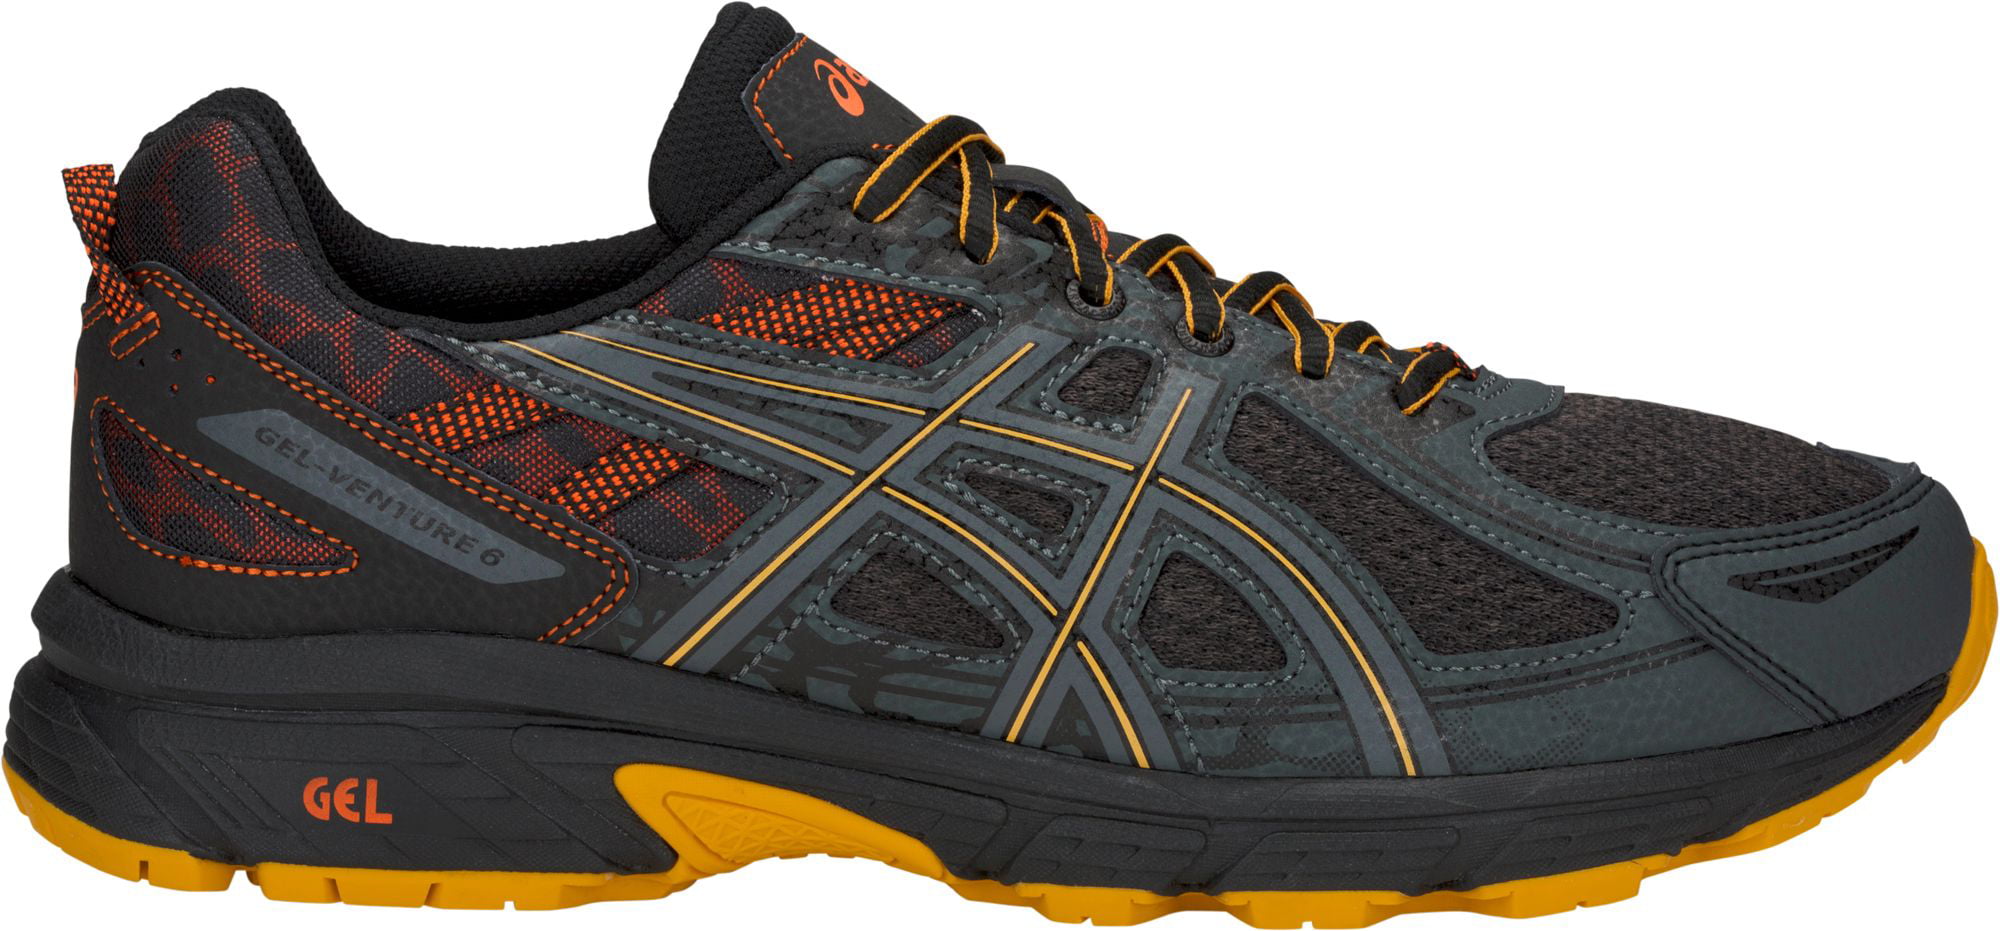 ASICS - ASICS Men's GEL-Venture 6 Trail Running Shoes - Walmart.com ...